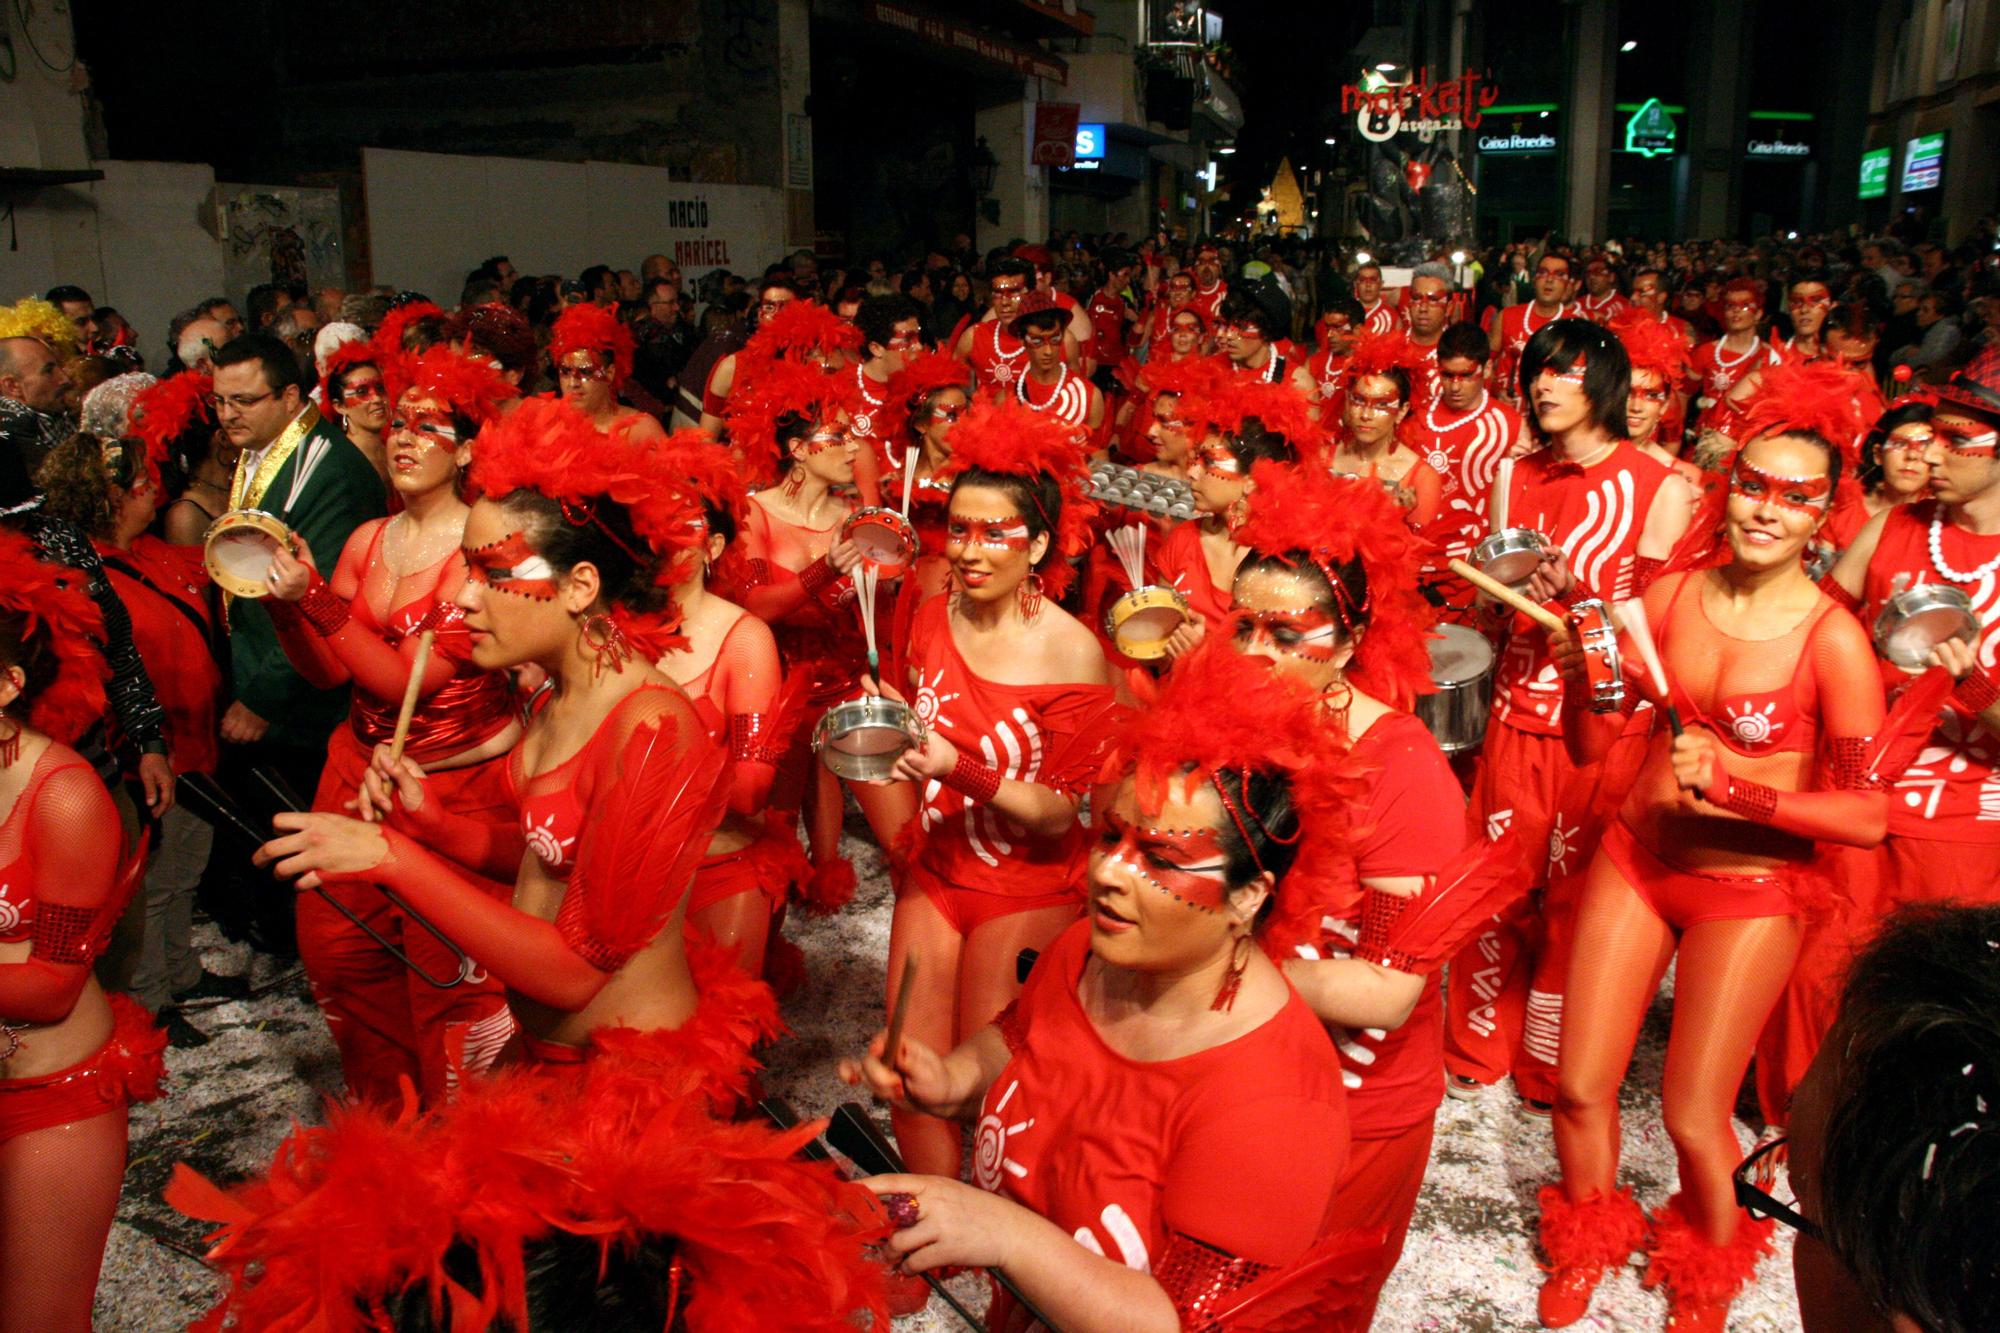 La Rua de la Disbauixa del Carnaval de Sitges, en una foto de archivo.